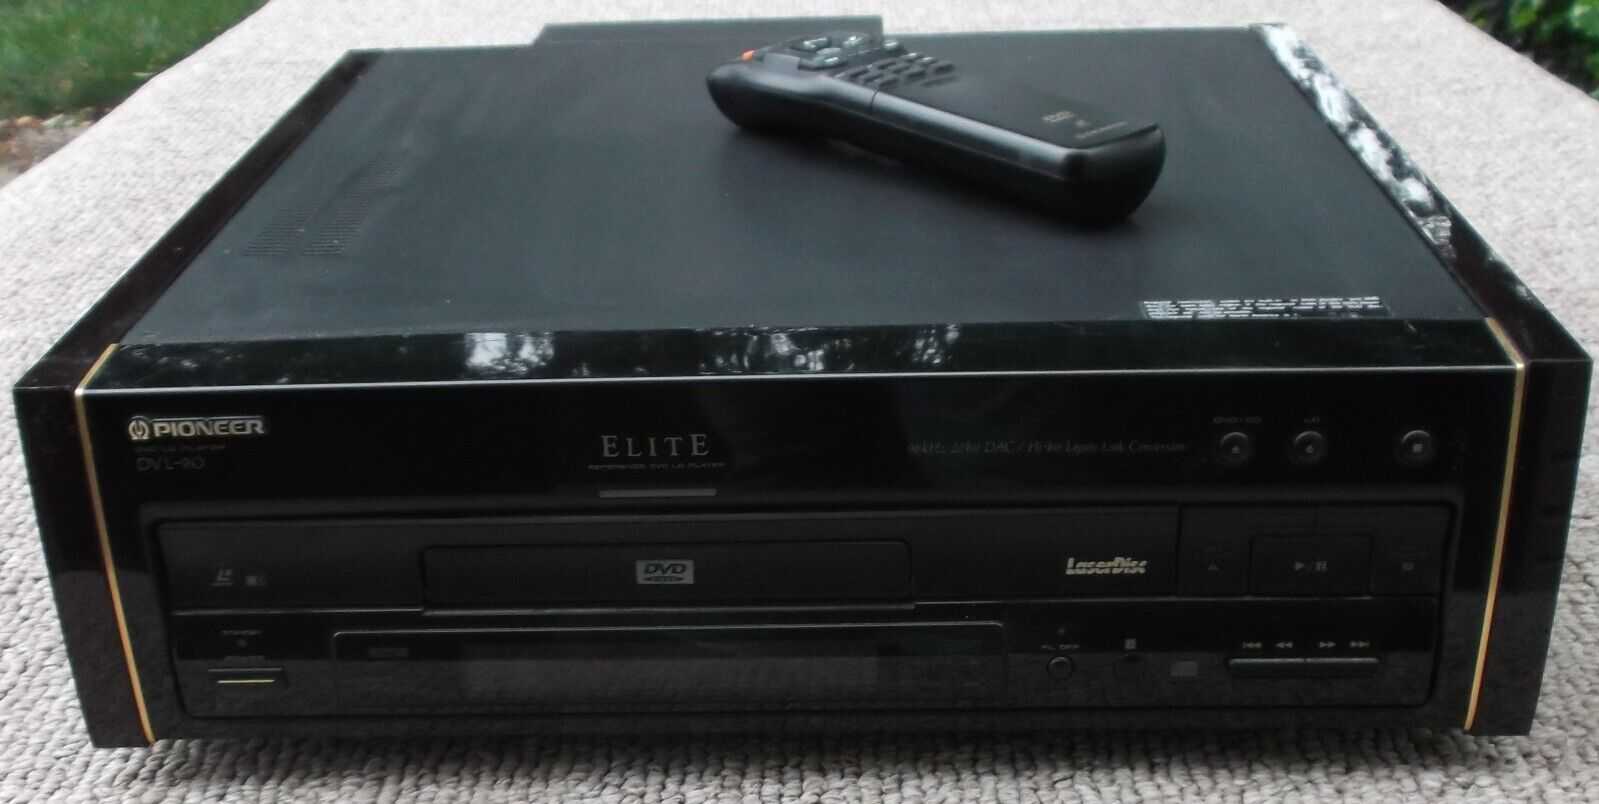 Pioneer Elite Reference DVD Laserdisc Player DVL-90 with Original Remote